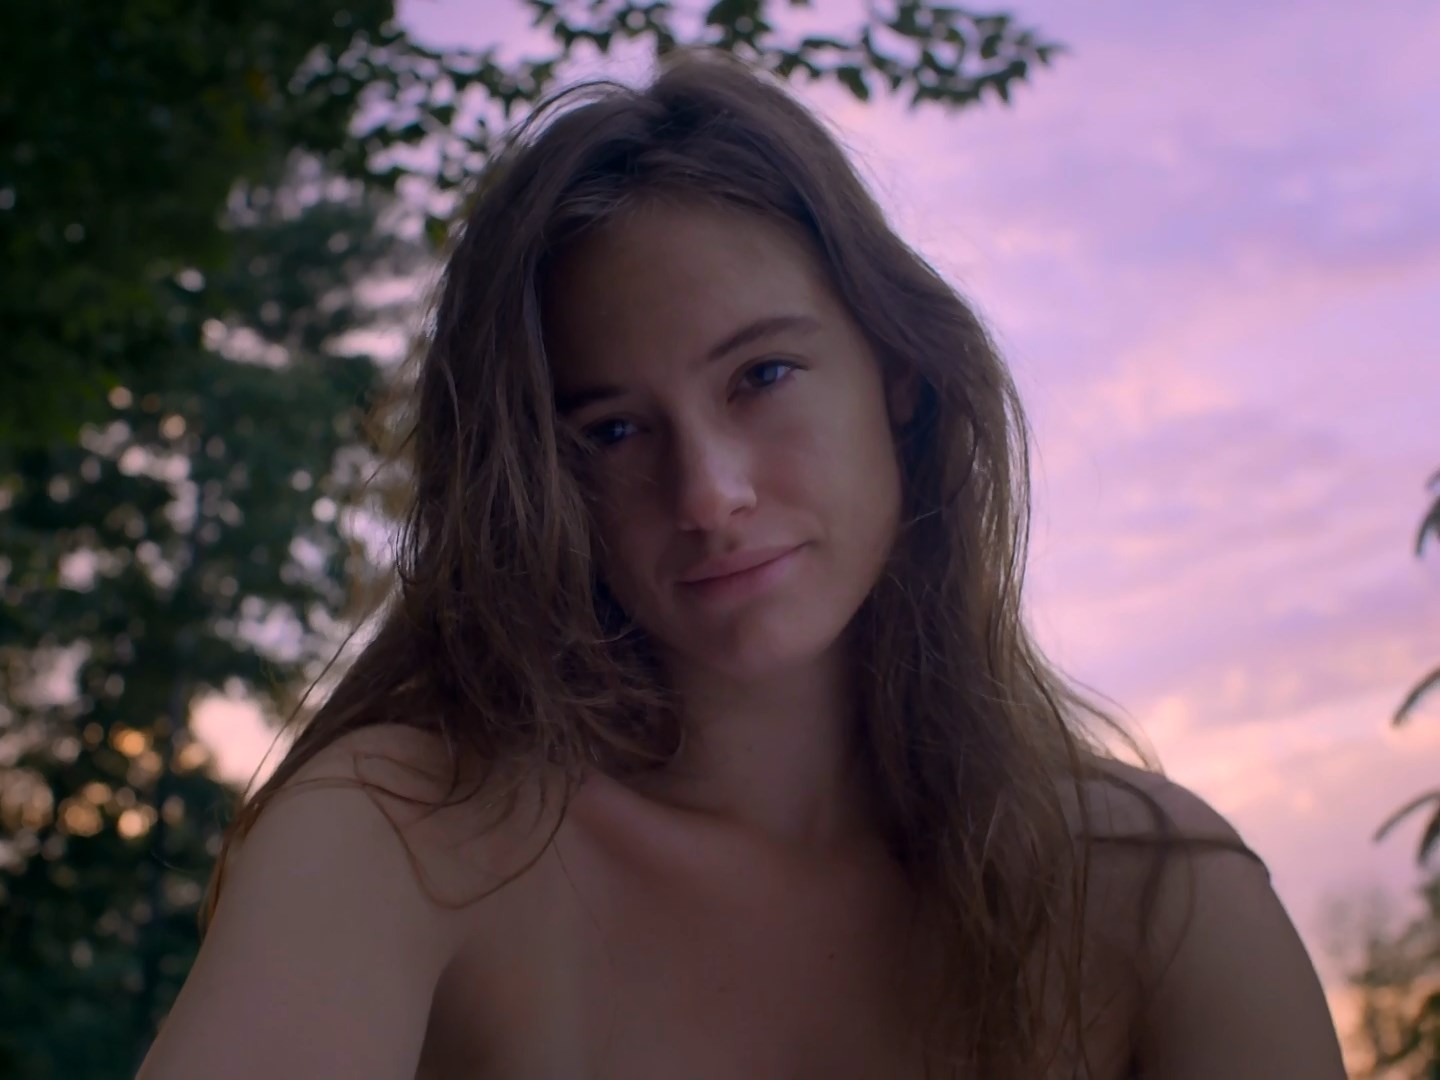 Nude video celebs » Christine Spang nude - The Naked Woman (2019)